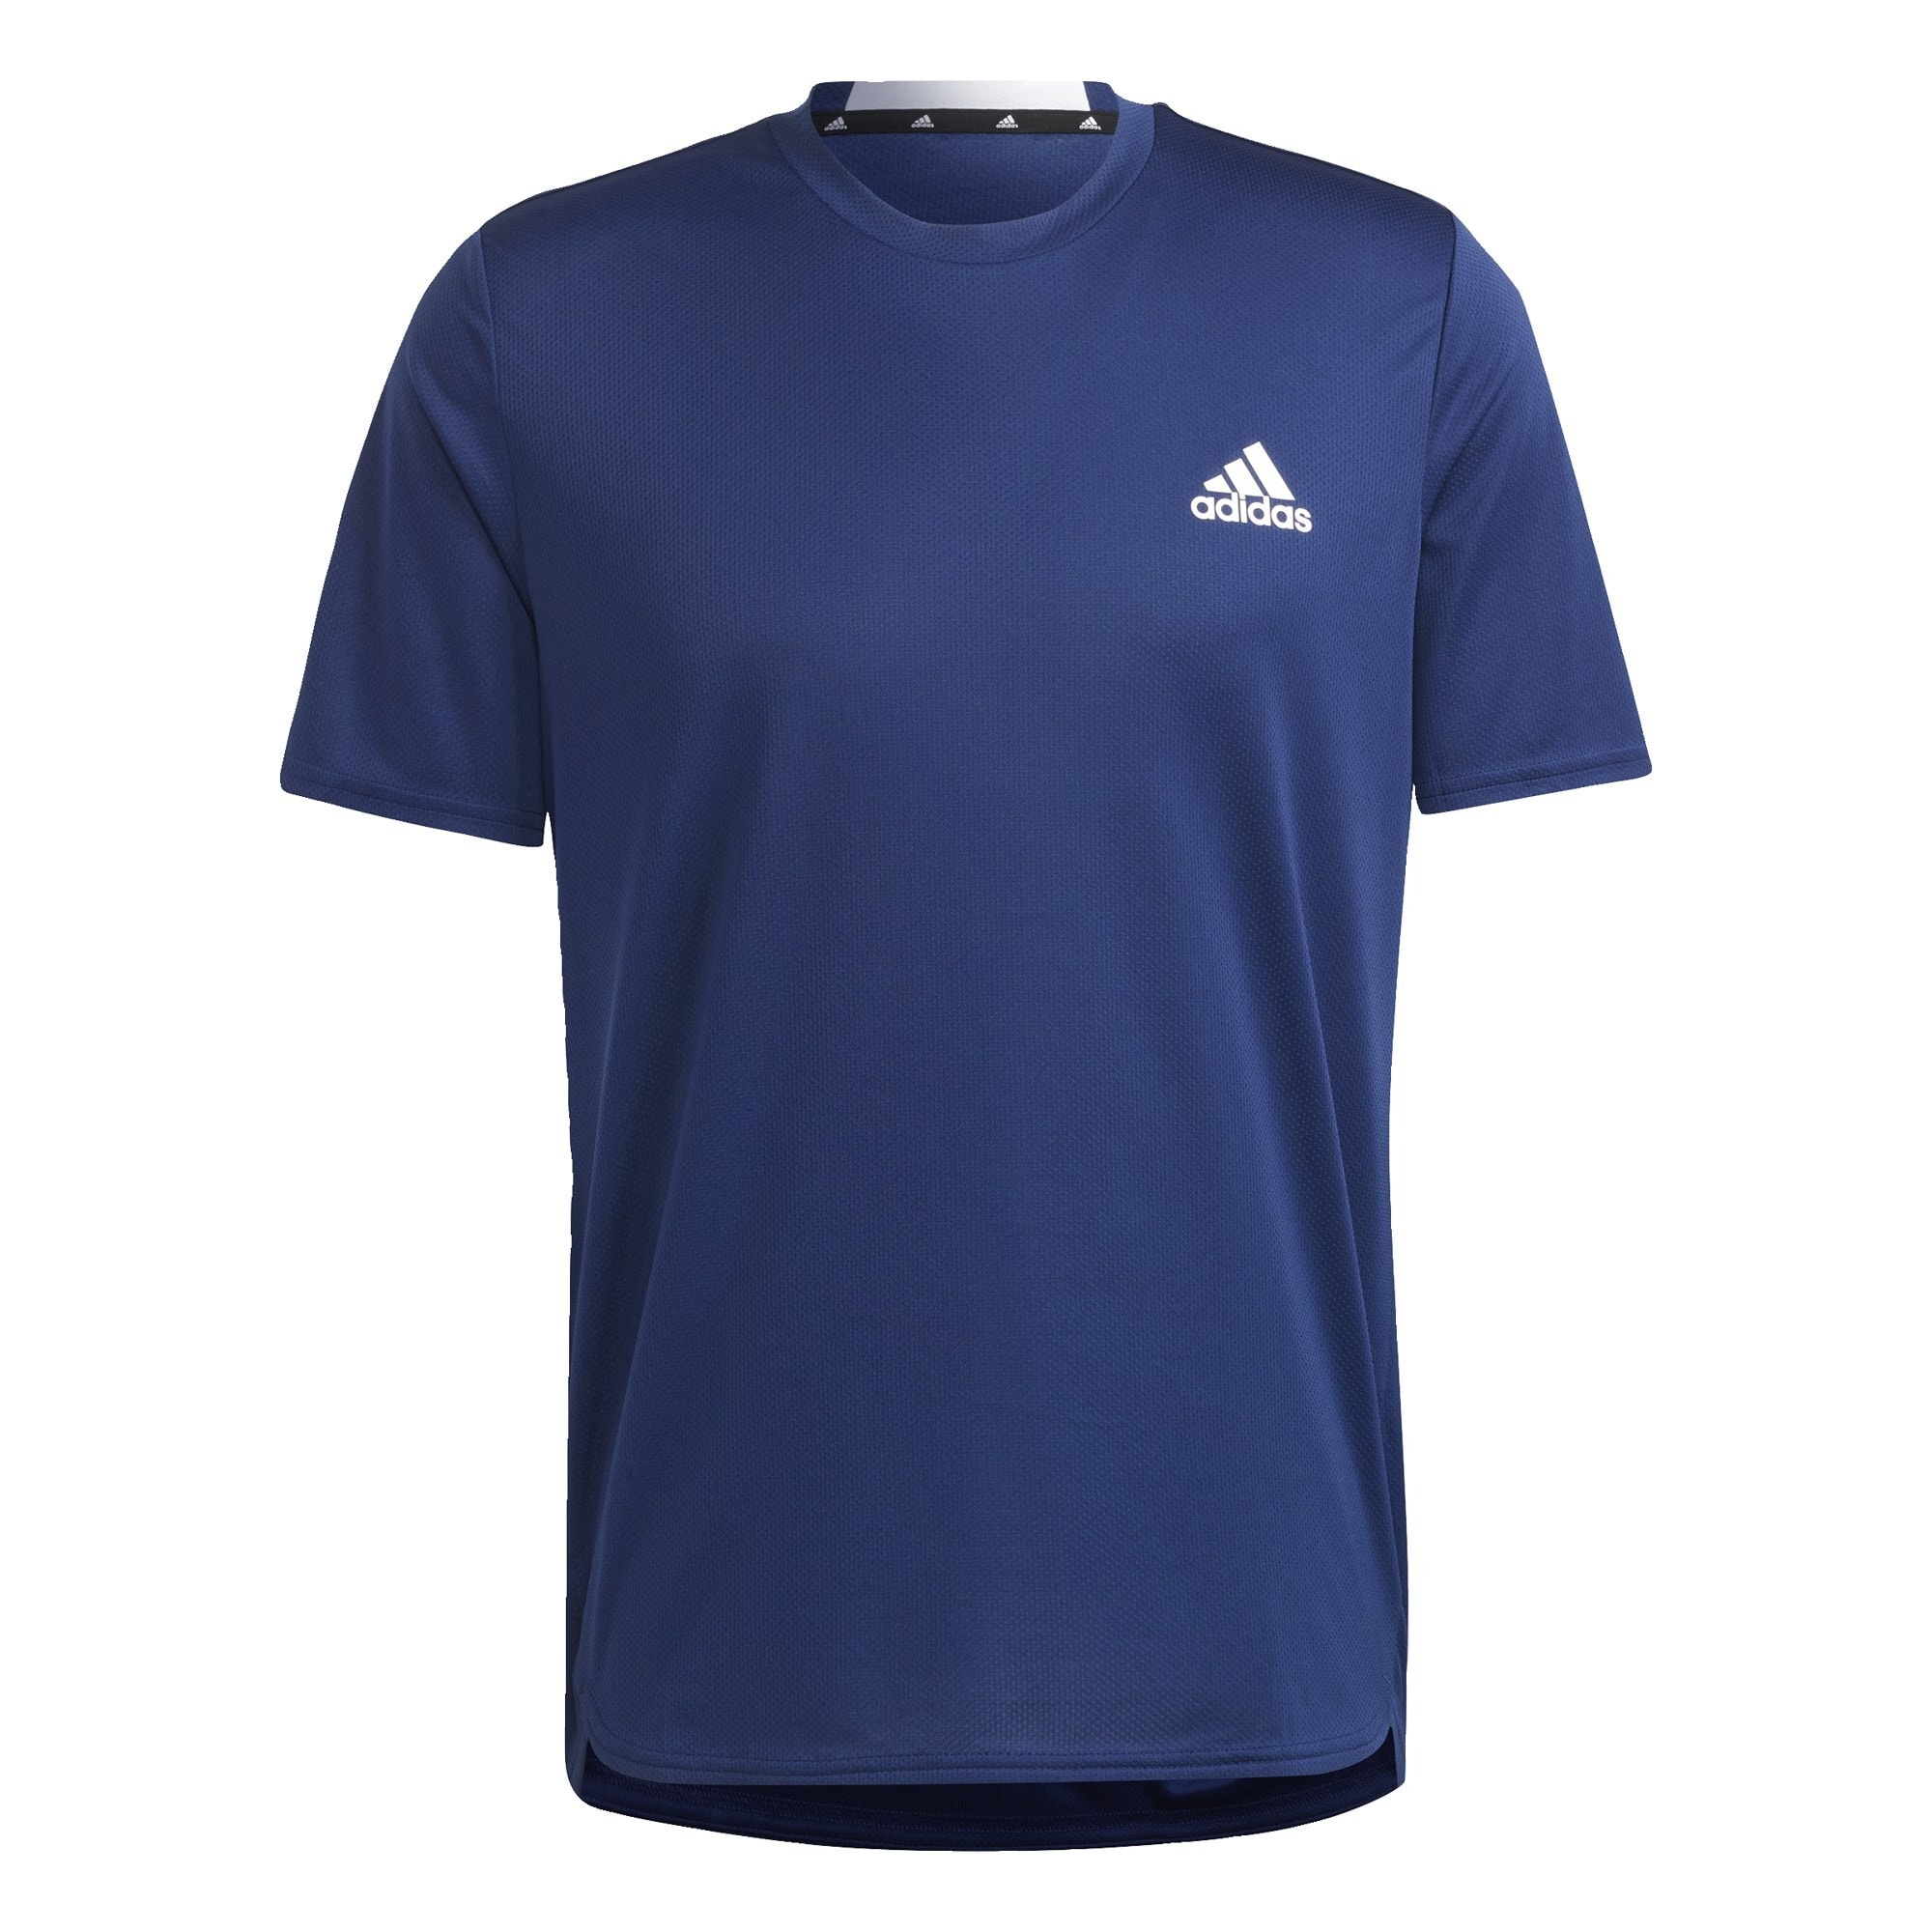 adidas AEROREADY Designed for Movement T-Shirt | Pro:Direct Tennis